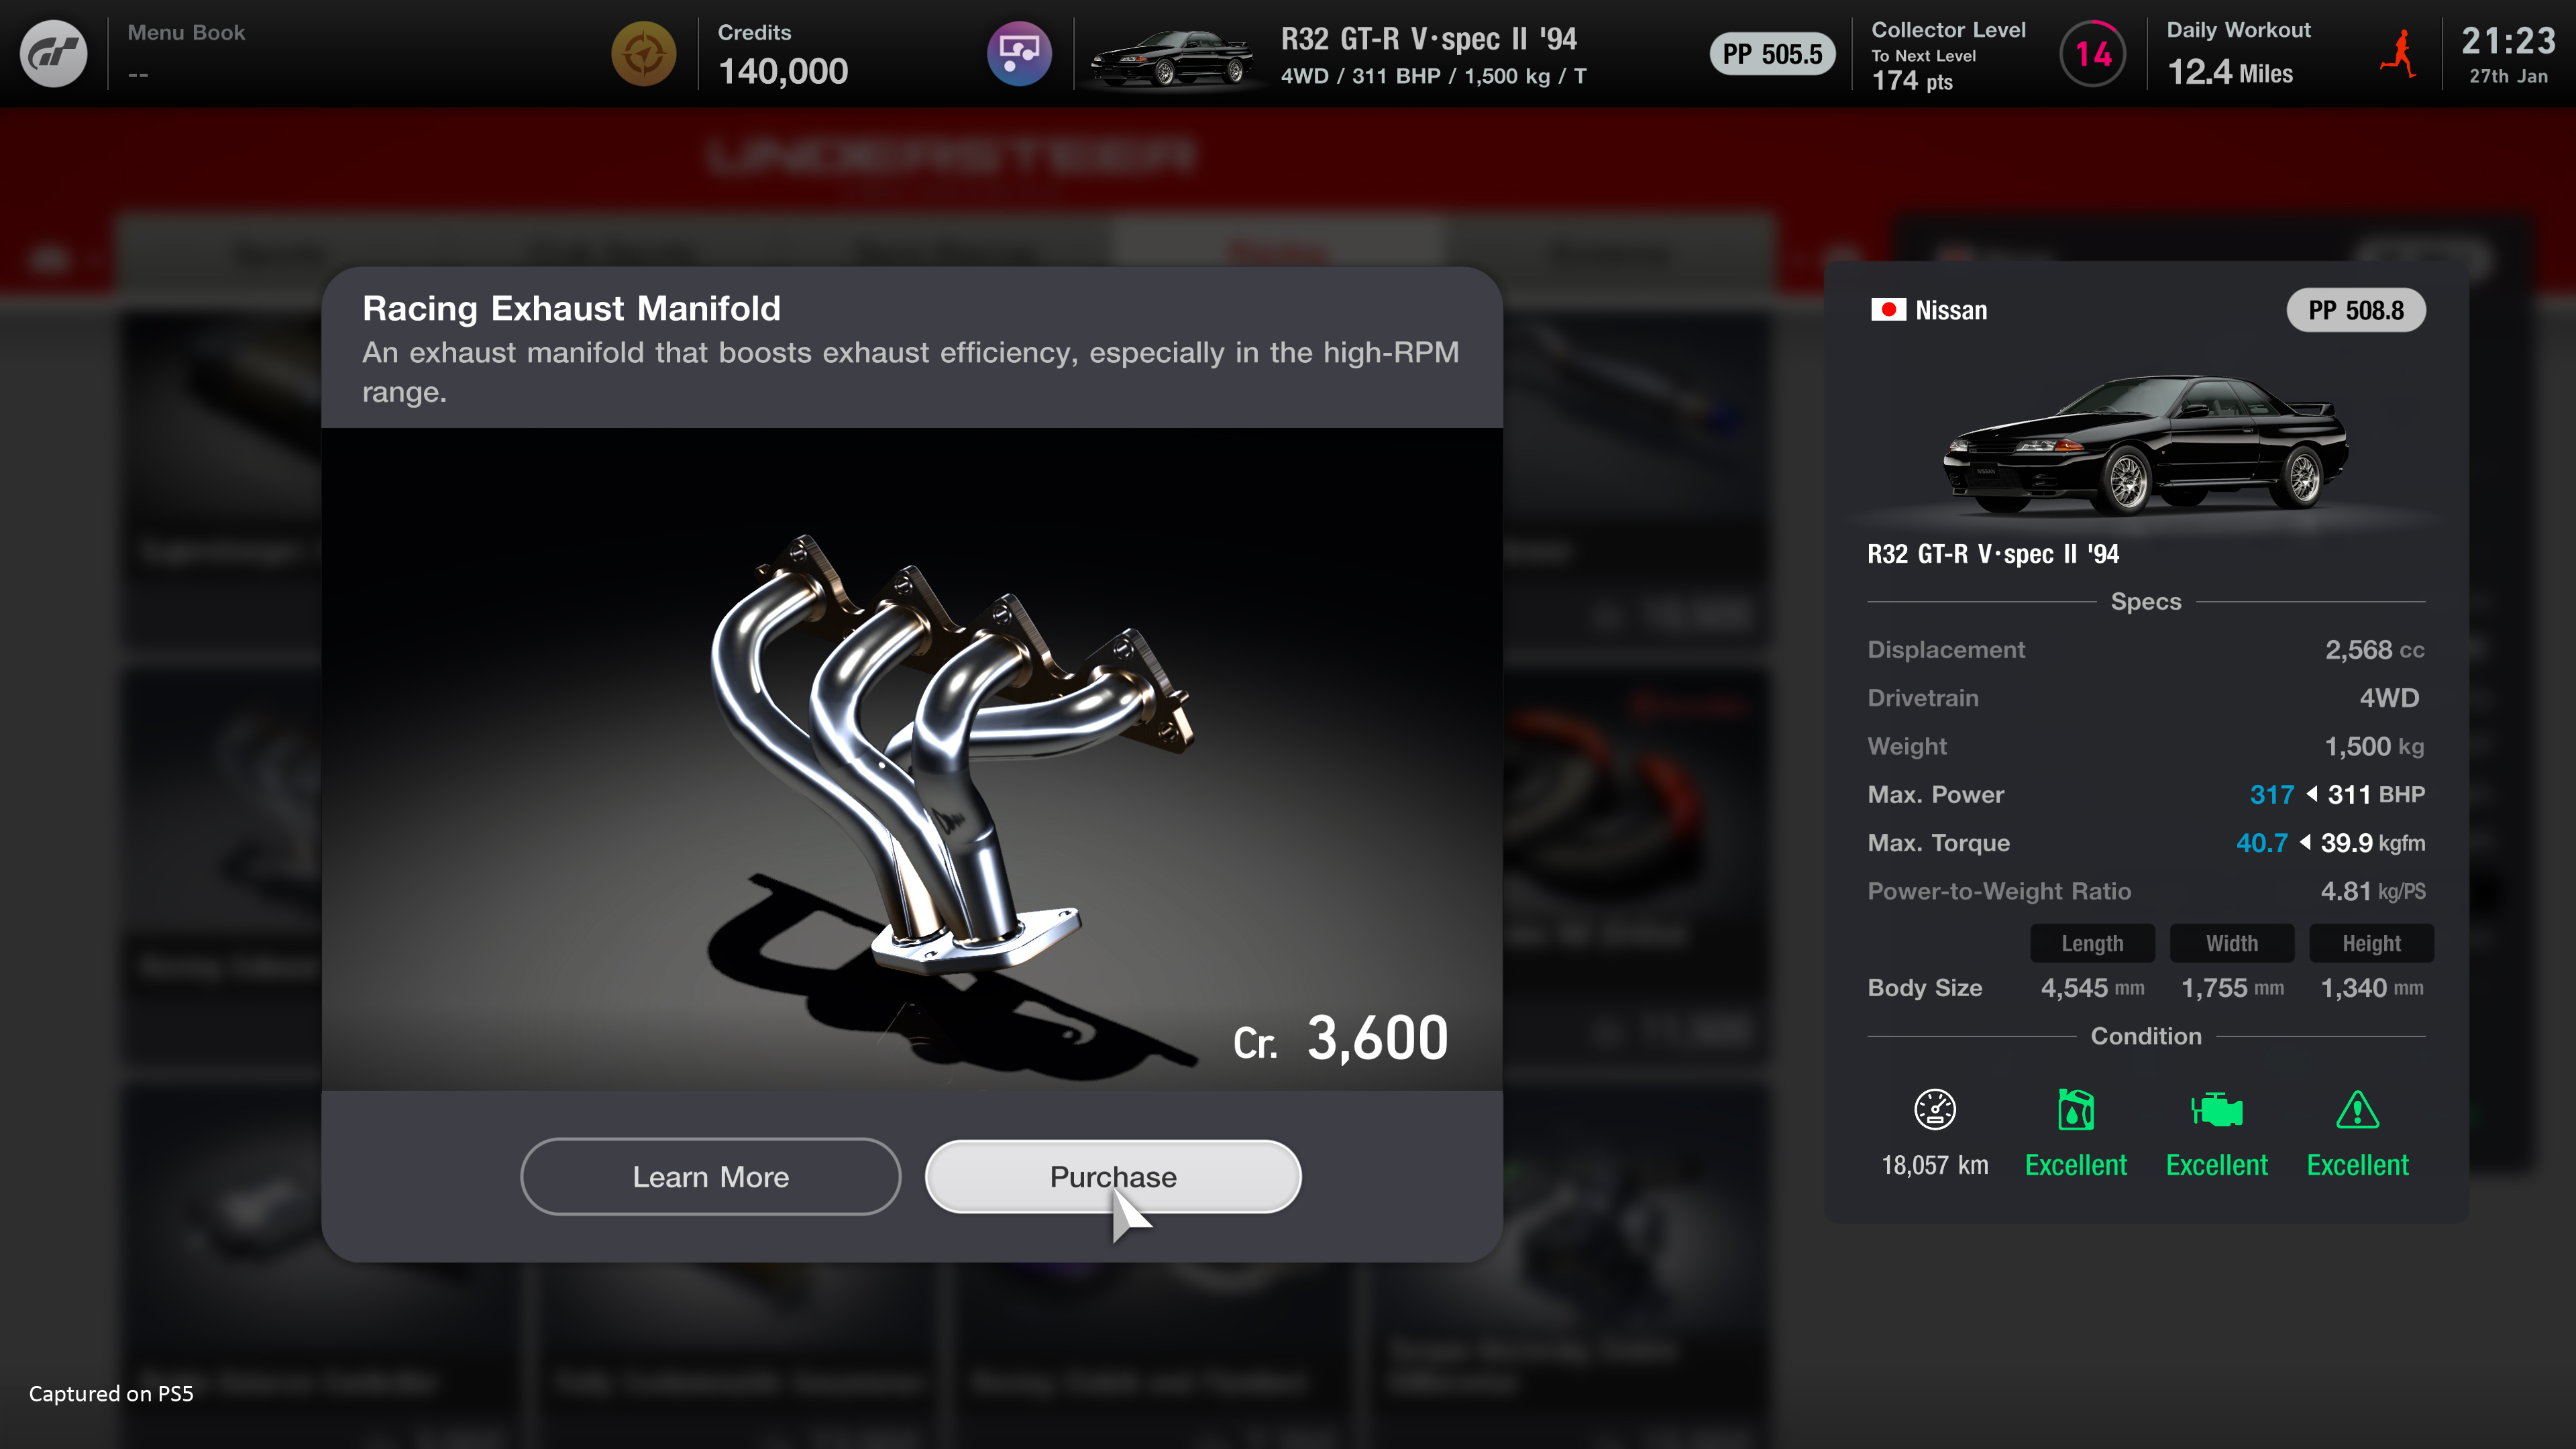 Gran Turismo 7 game menu to purchase items